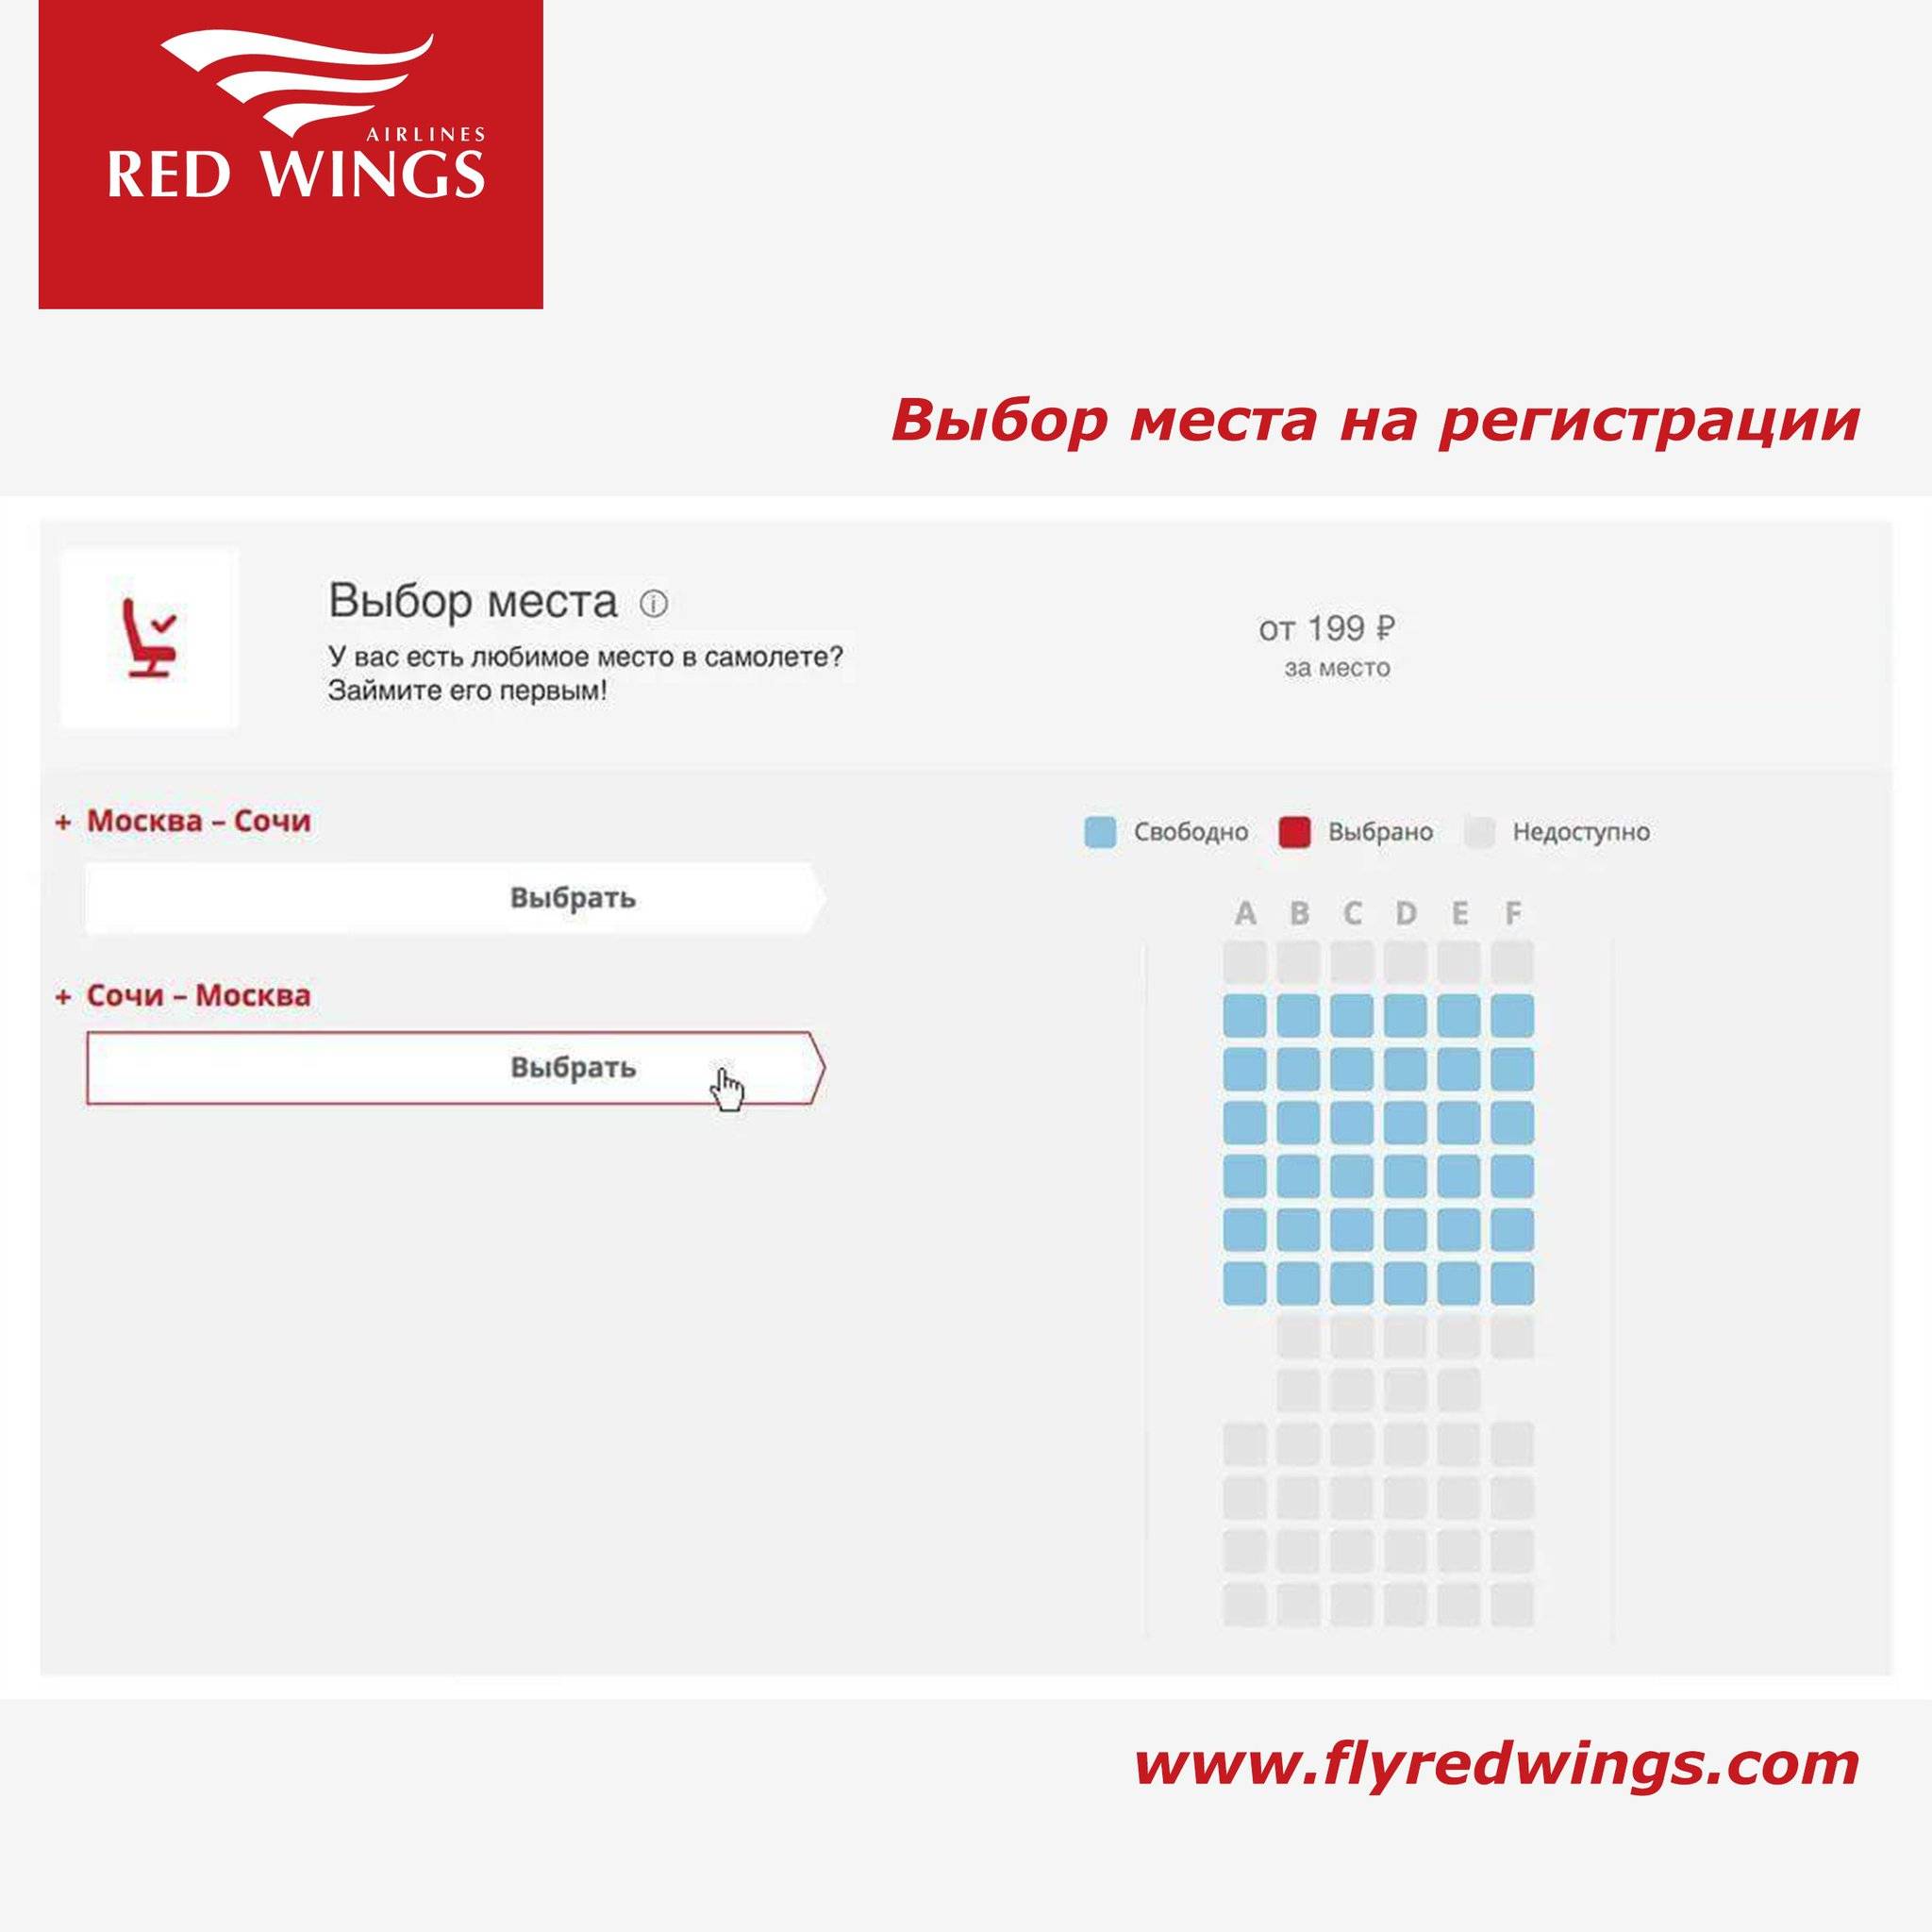 Онлайн регистрация на рейсы авиакомпании red wings | авианити